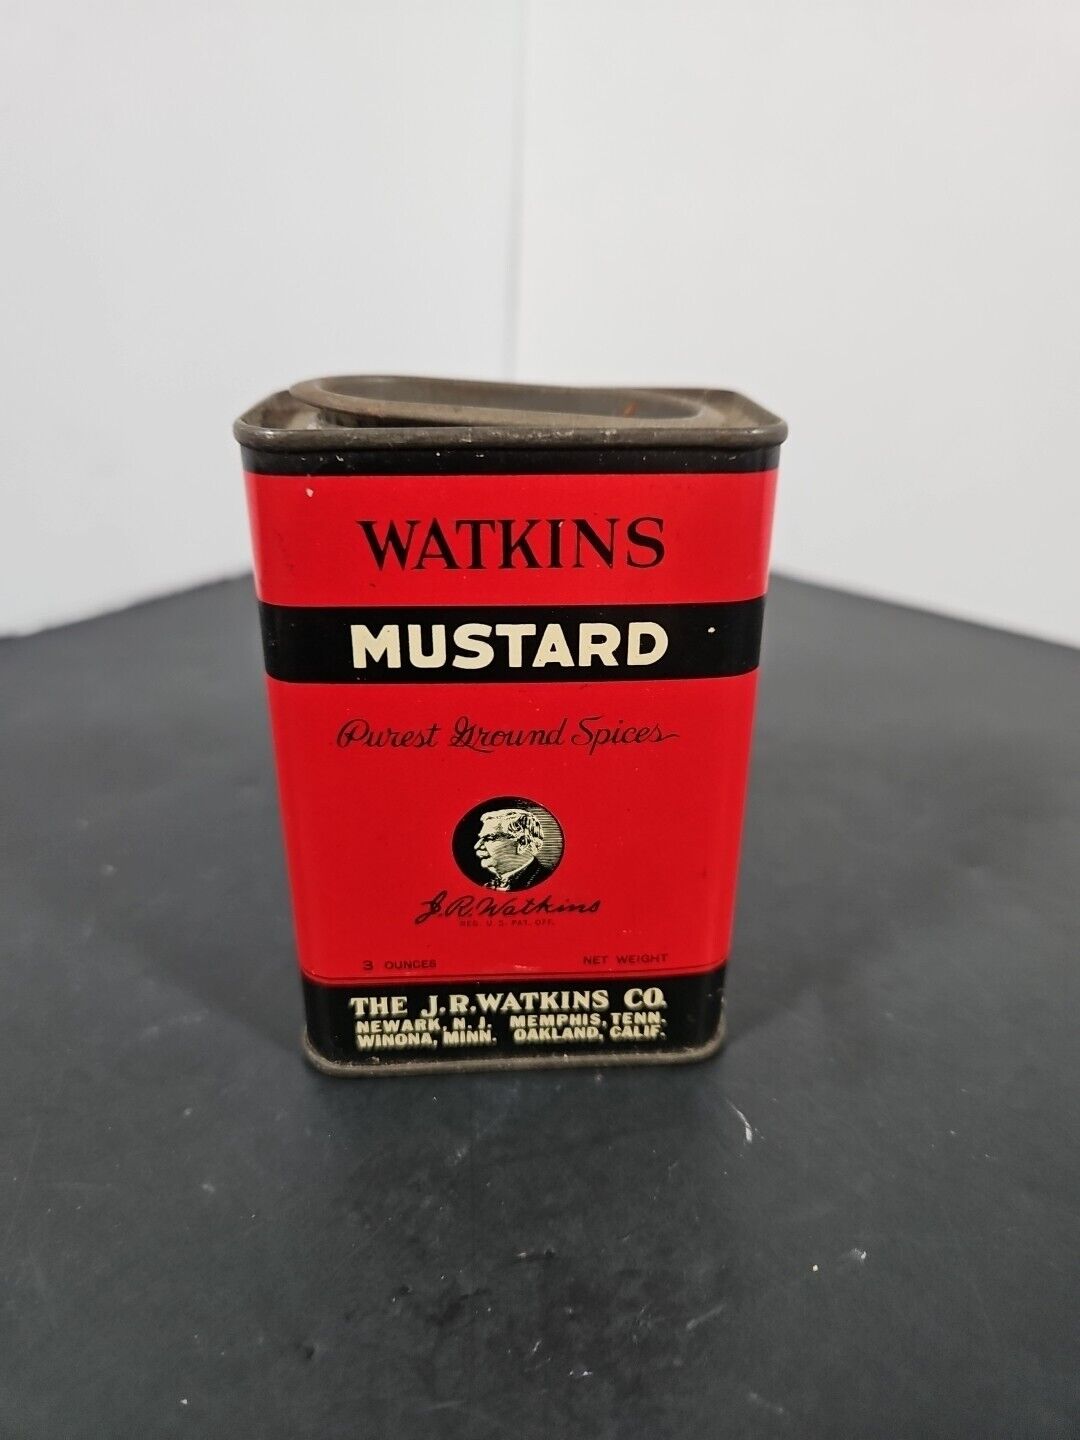 Vintage WATKINS MUSTARD SPICE TIN - J.R. Watkins Co. - 3 Oounce - Red 